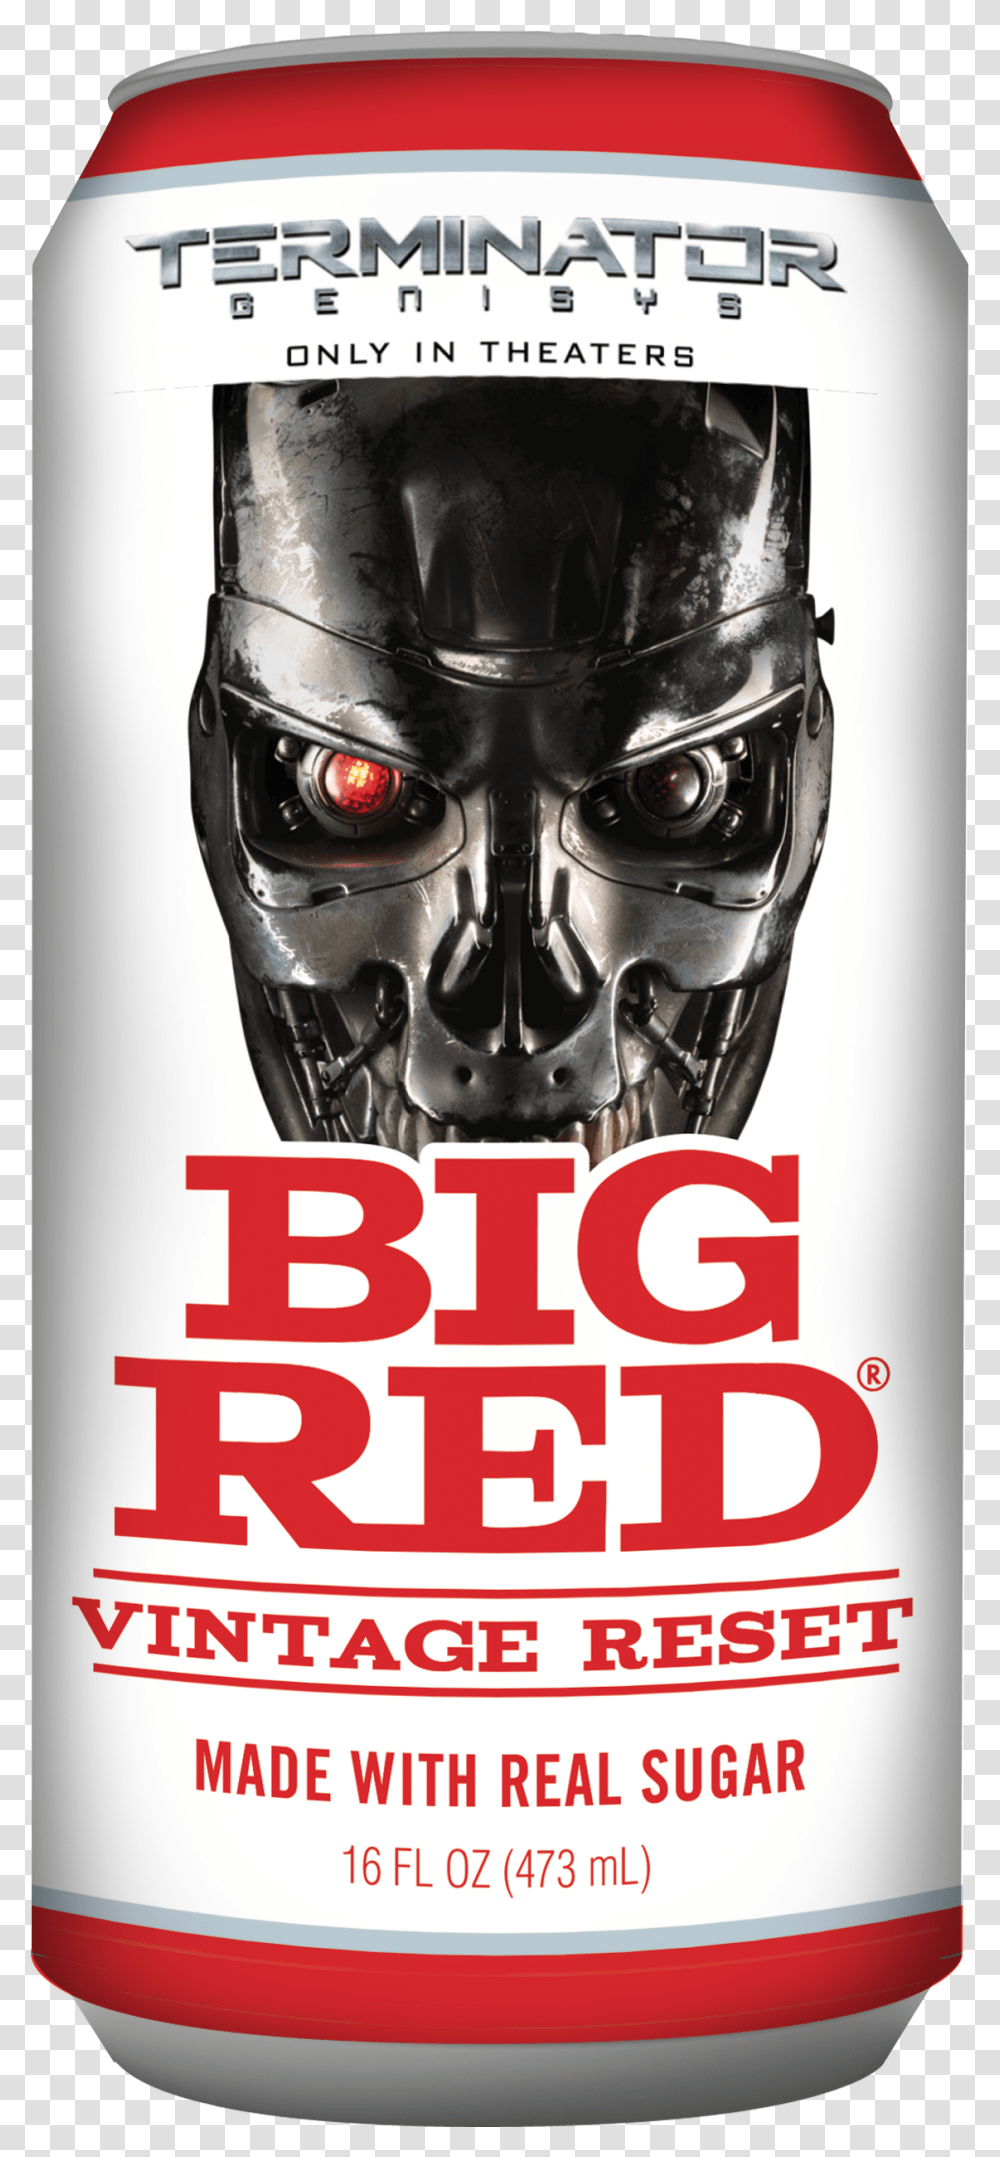 Big Red Vintage Reset Terminator Genisys Can Poster, Helmet, Apparel, Mask Transparent Png